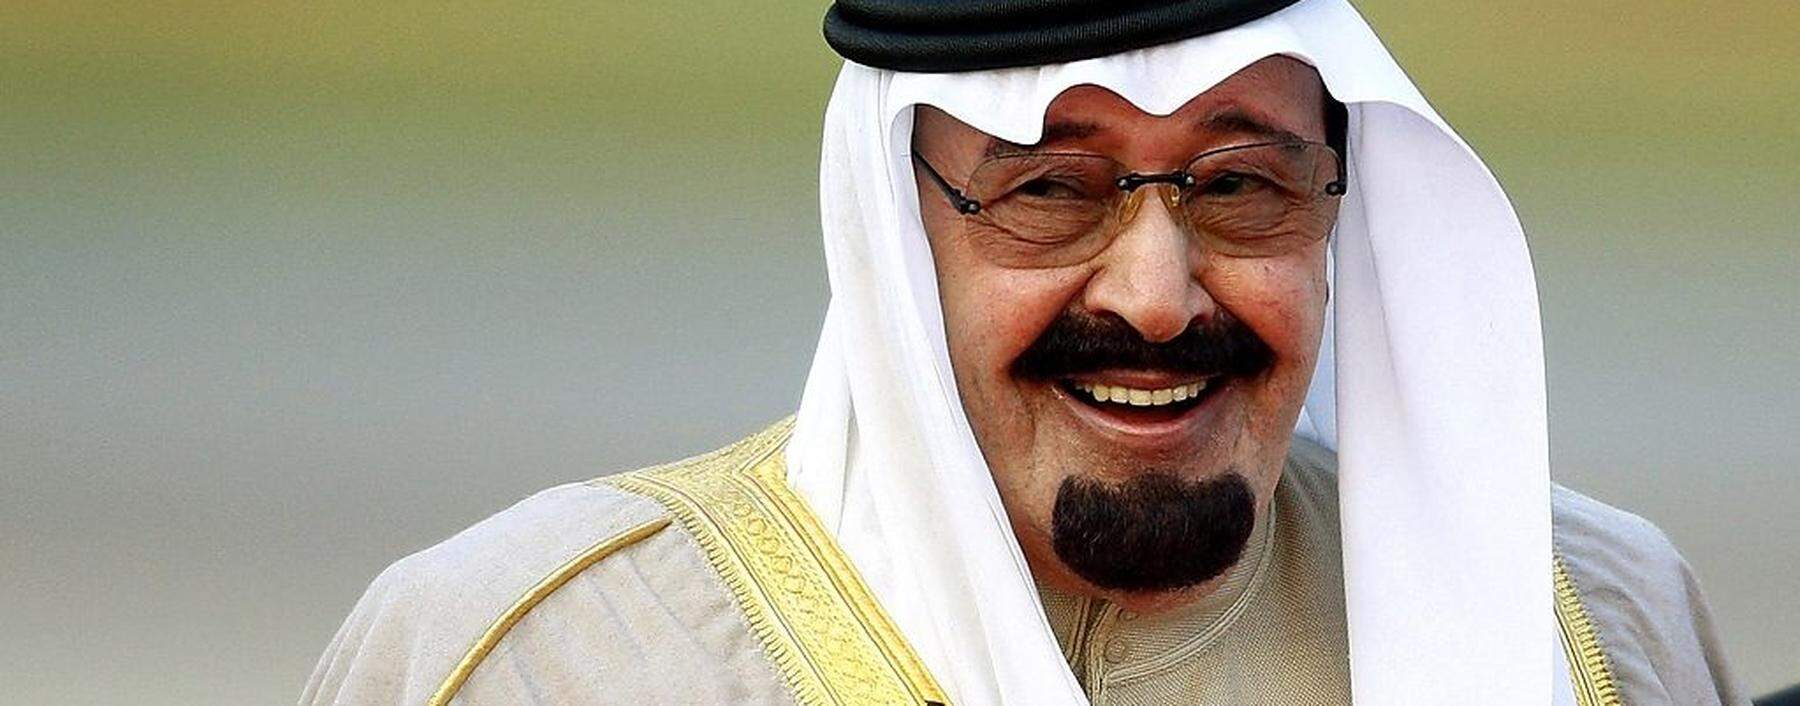 File photo of Saudi Arabia's King Abdullah bin Abdulaziz arriving at Heathrow Airport in west London